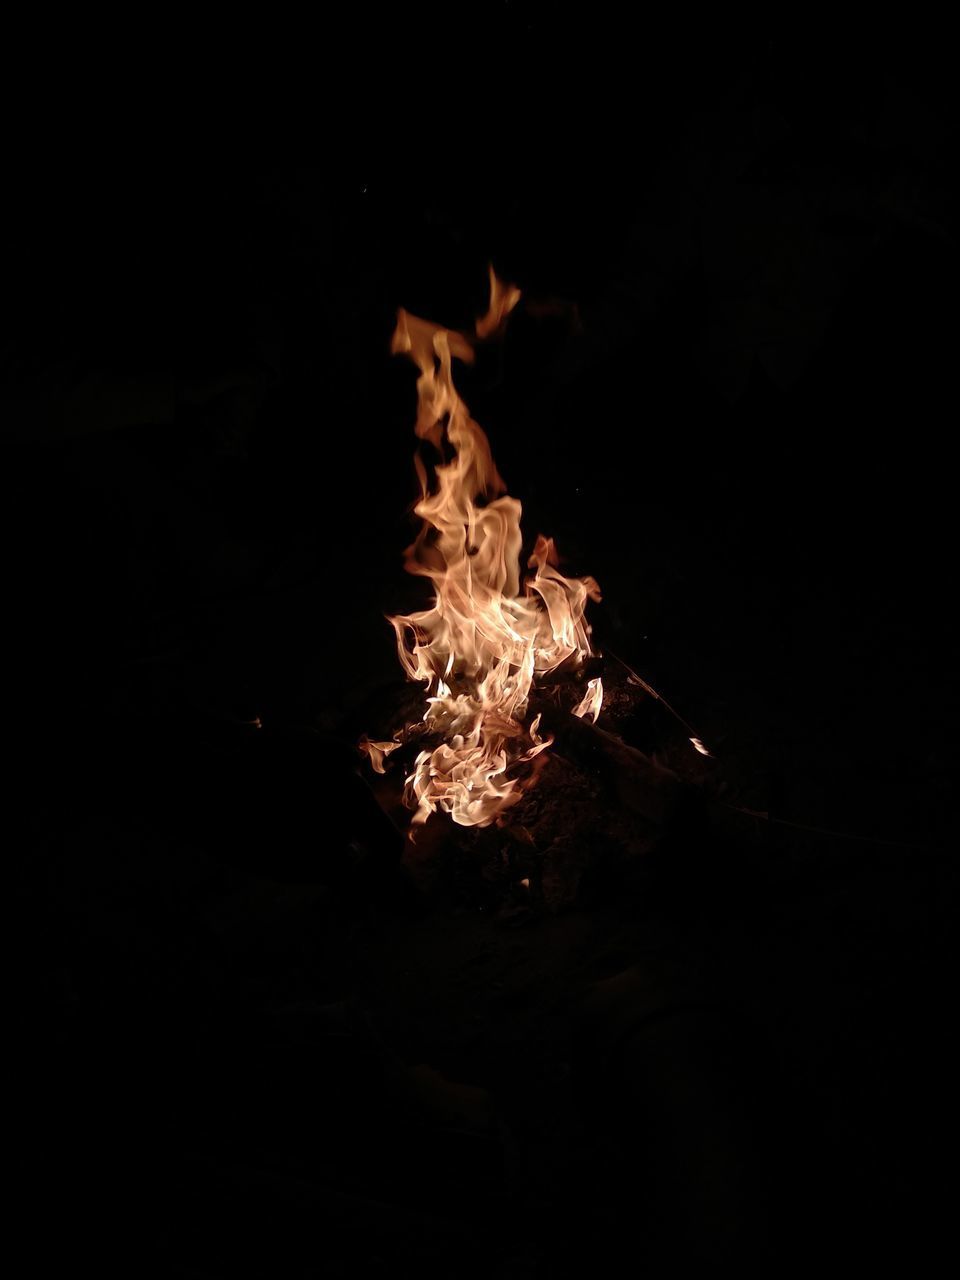 FIRE BURNING AT NIGHT